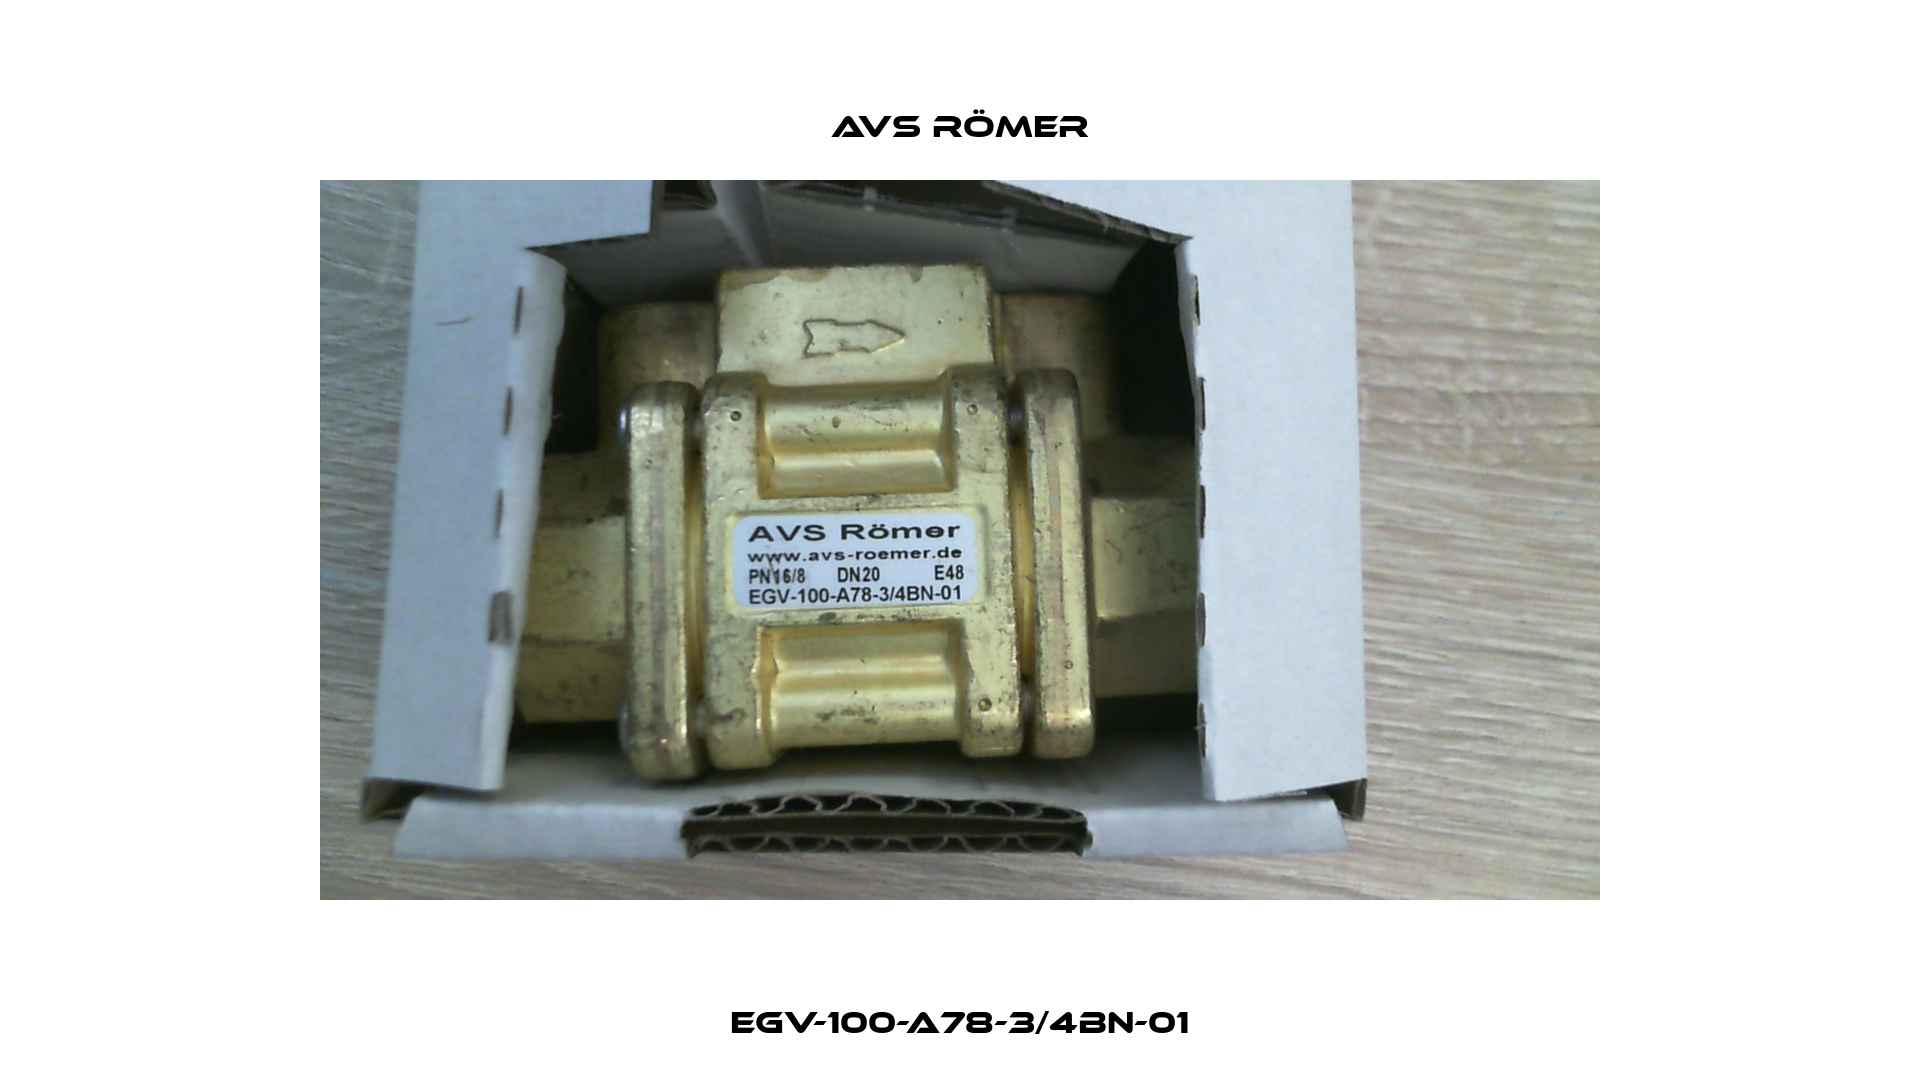 EGV-100-A78-3/4BN-01 Avs Römer